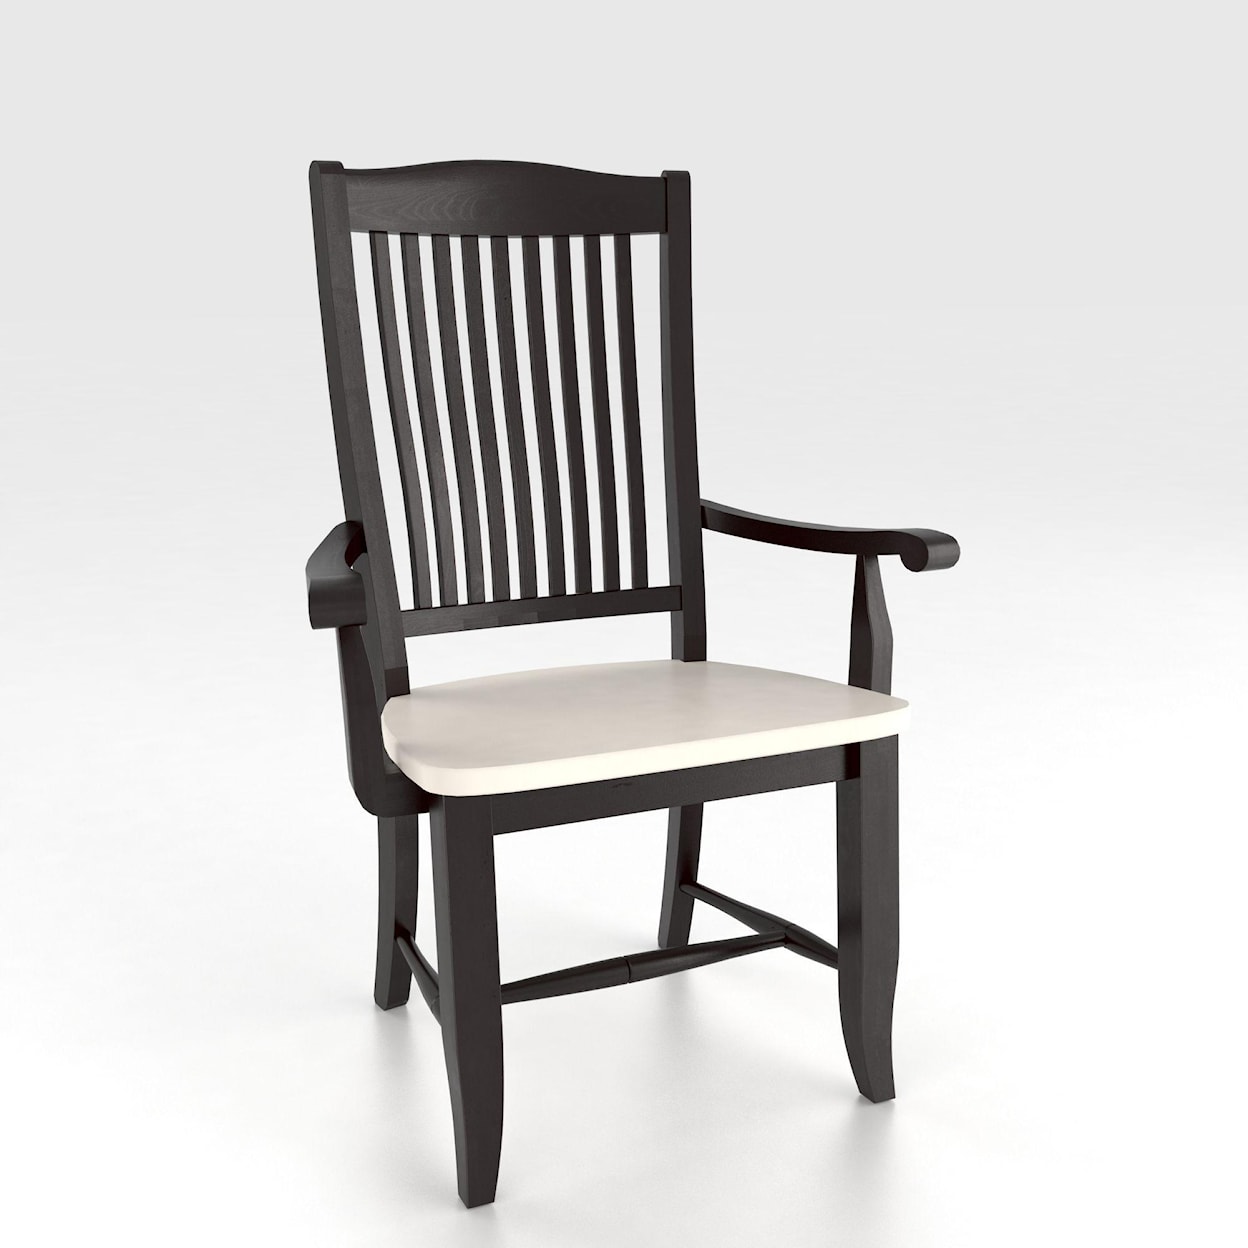 Canadel Canadel <b>Customizable</b> Armchair - Wood Seat